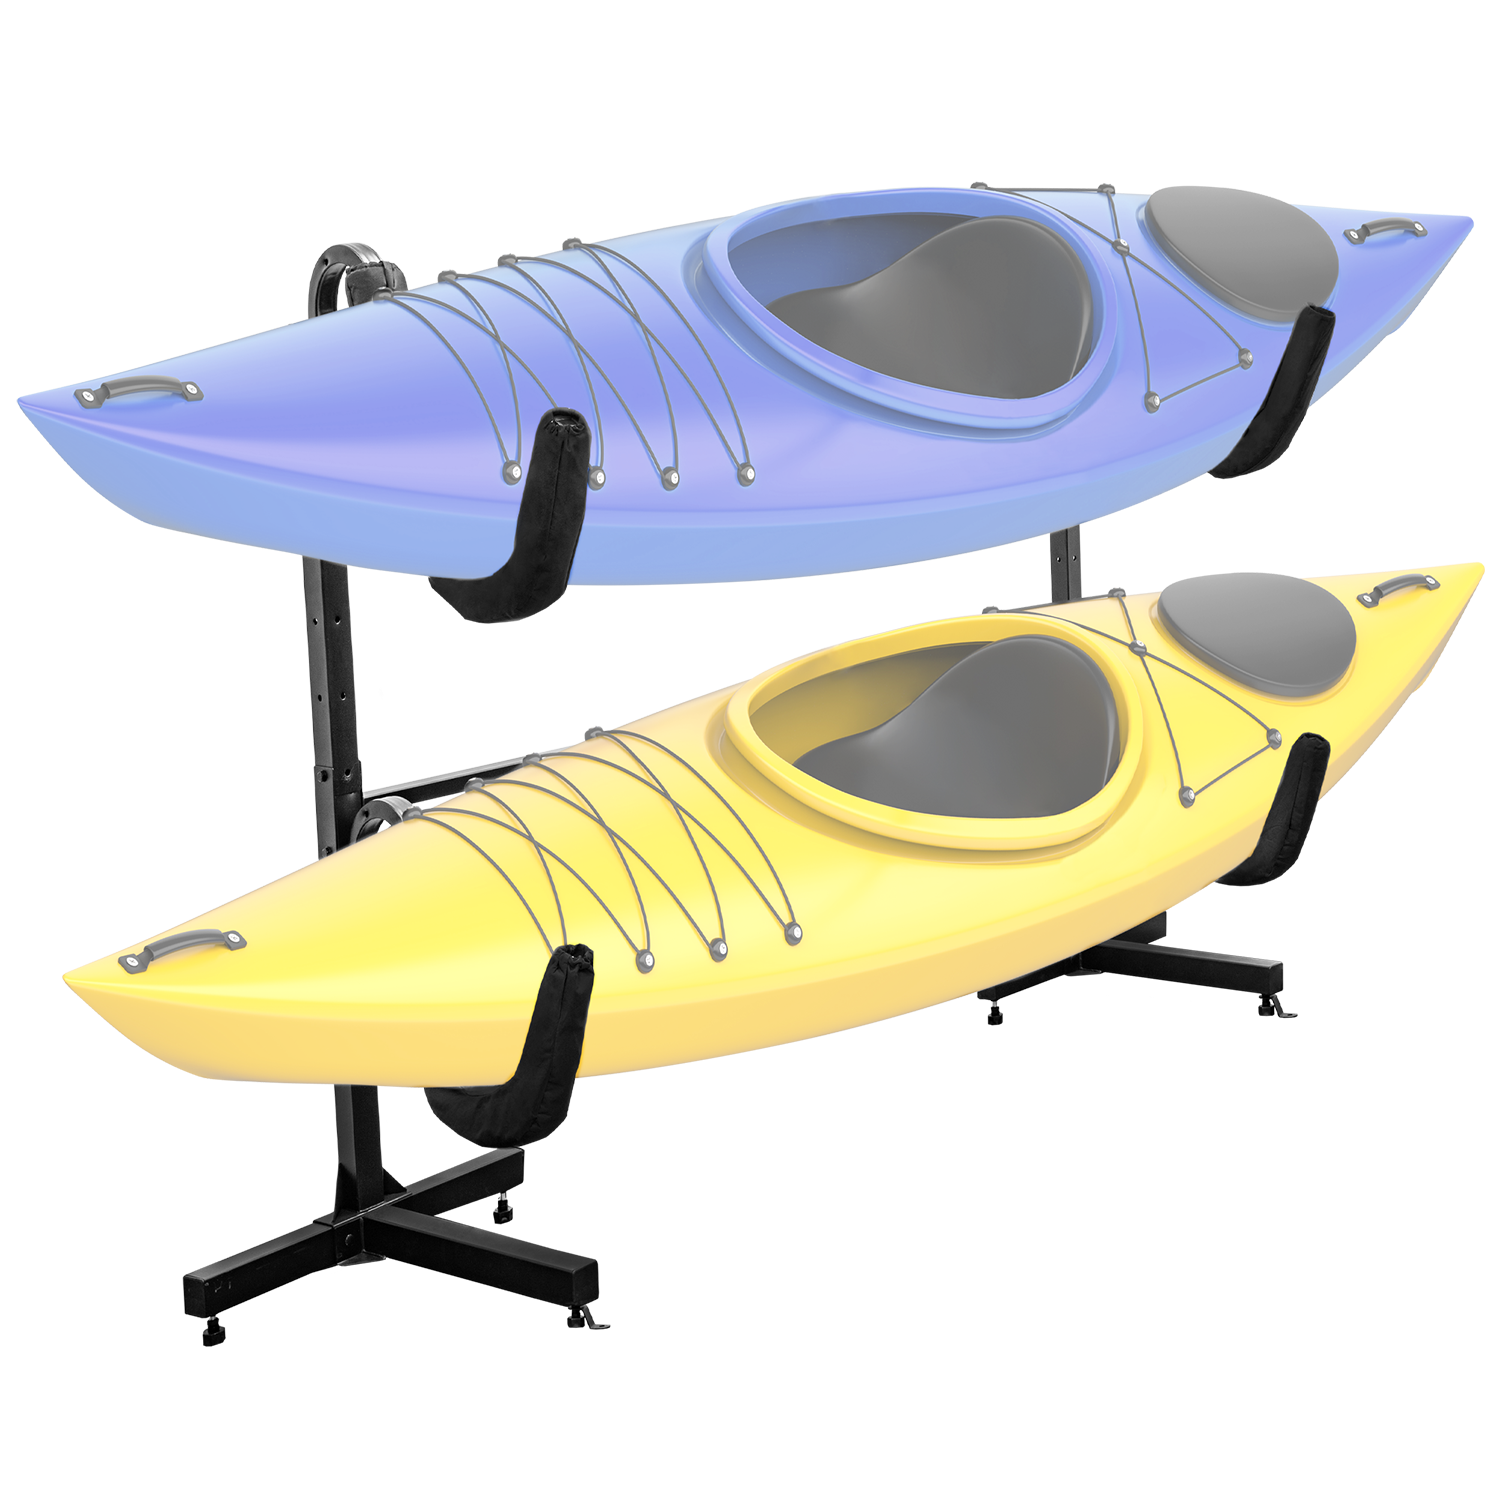 RaxGo Wall-Mounted Kayak Rack, 3-Pack Adjustable Kayak Storage Rack for  Garage, Storeroom or Dock